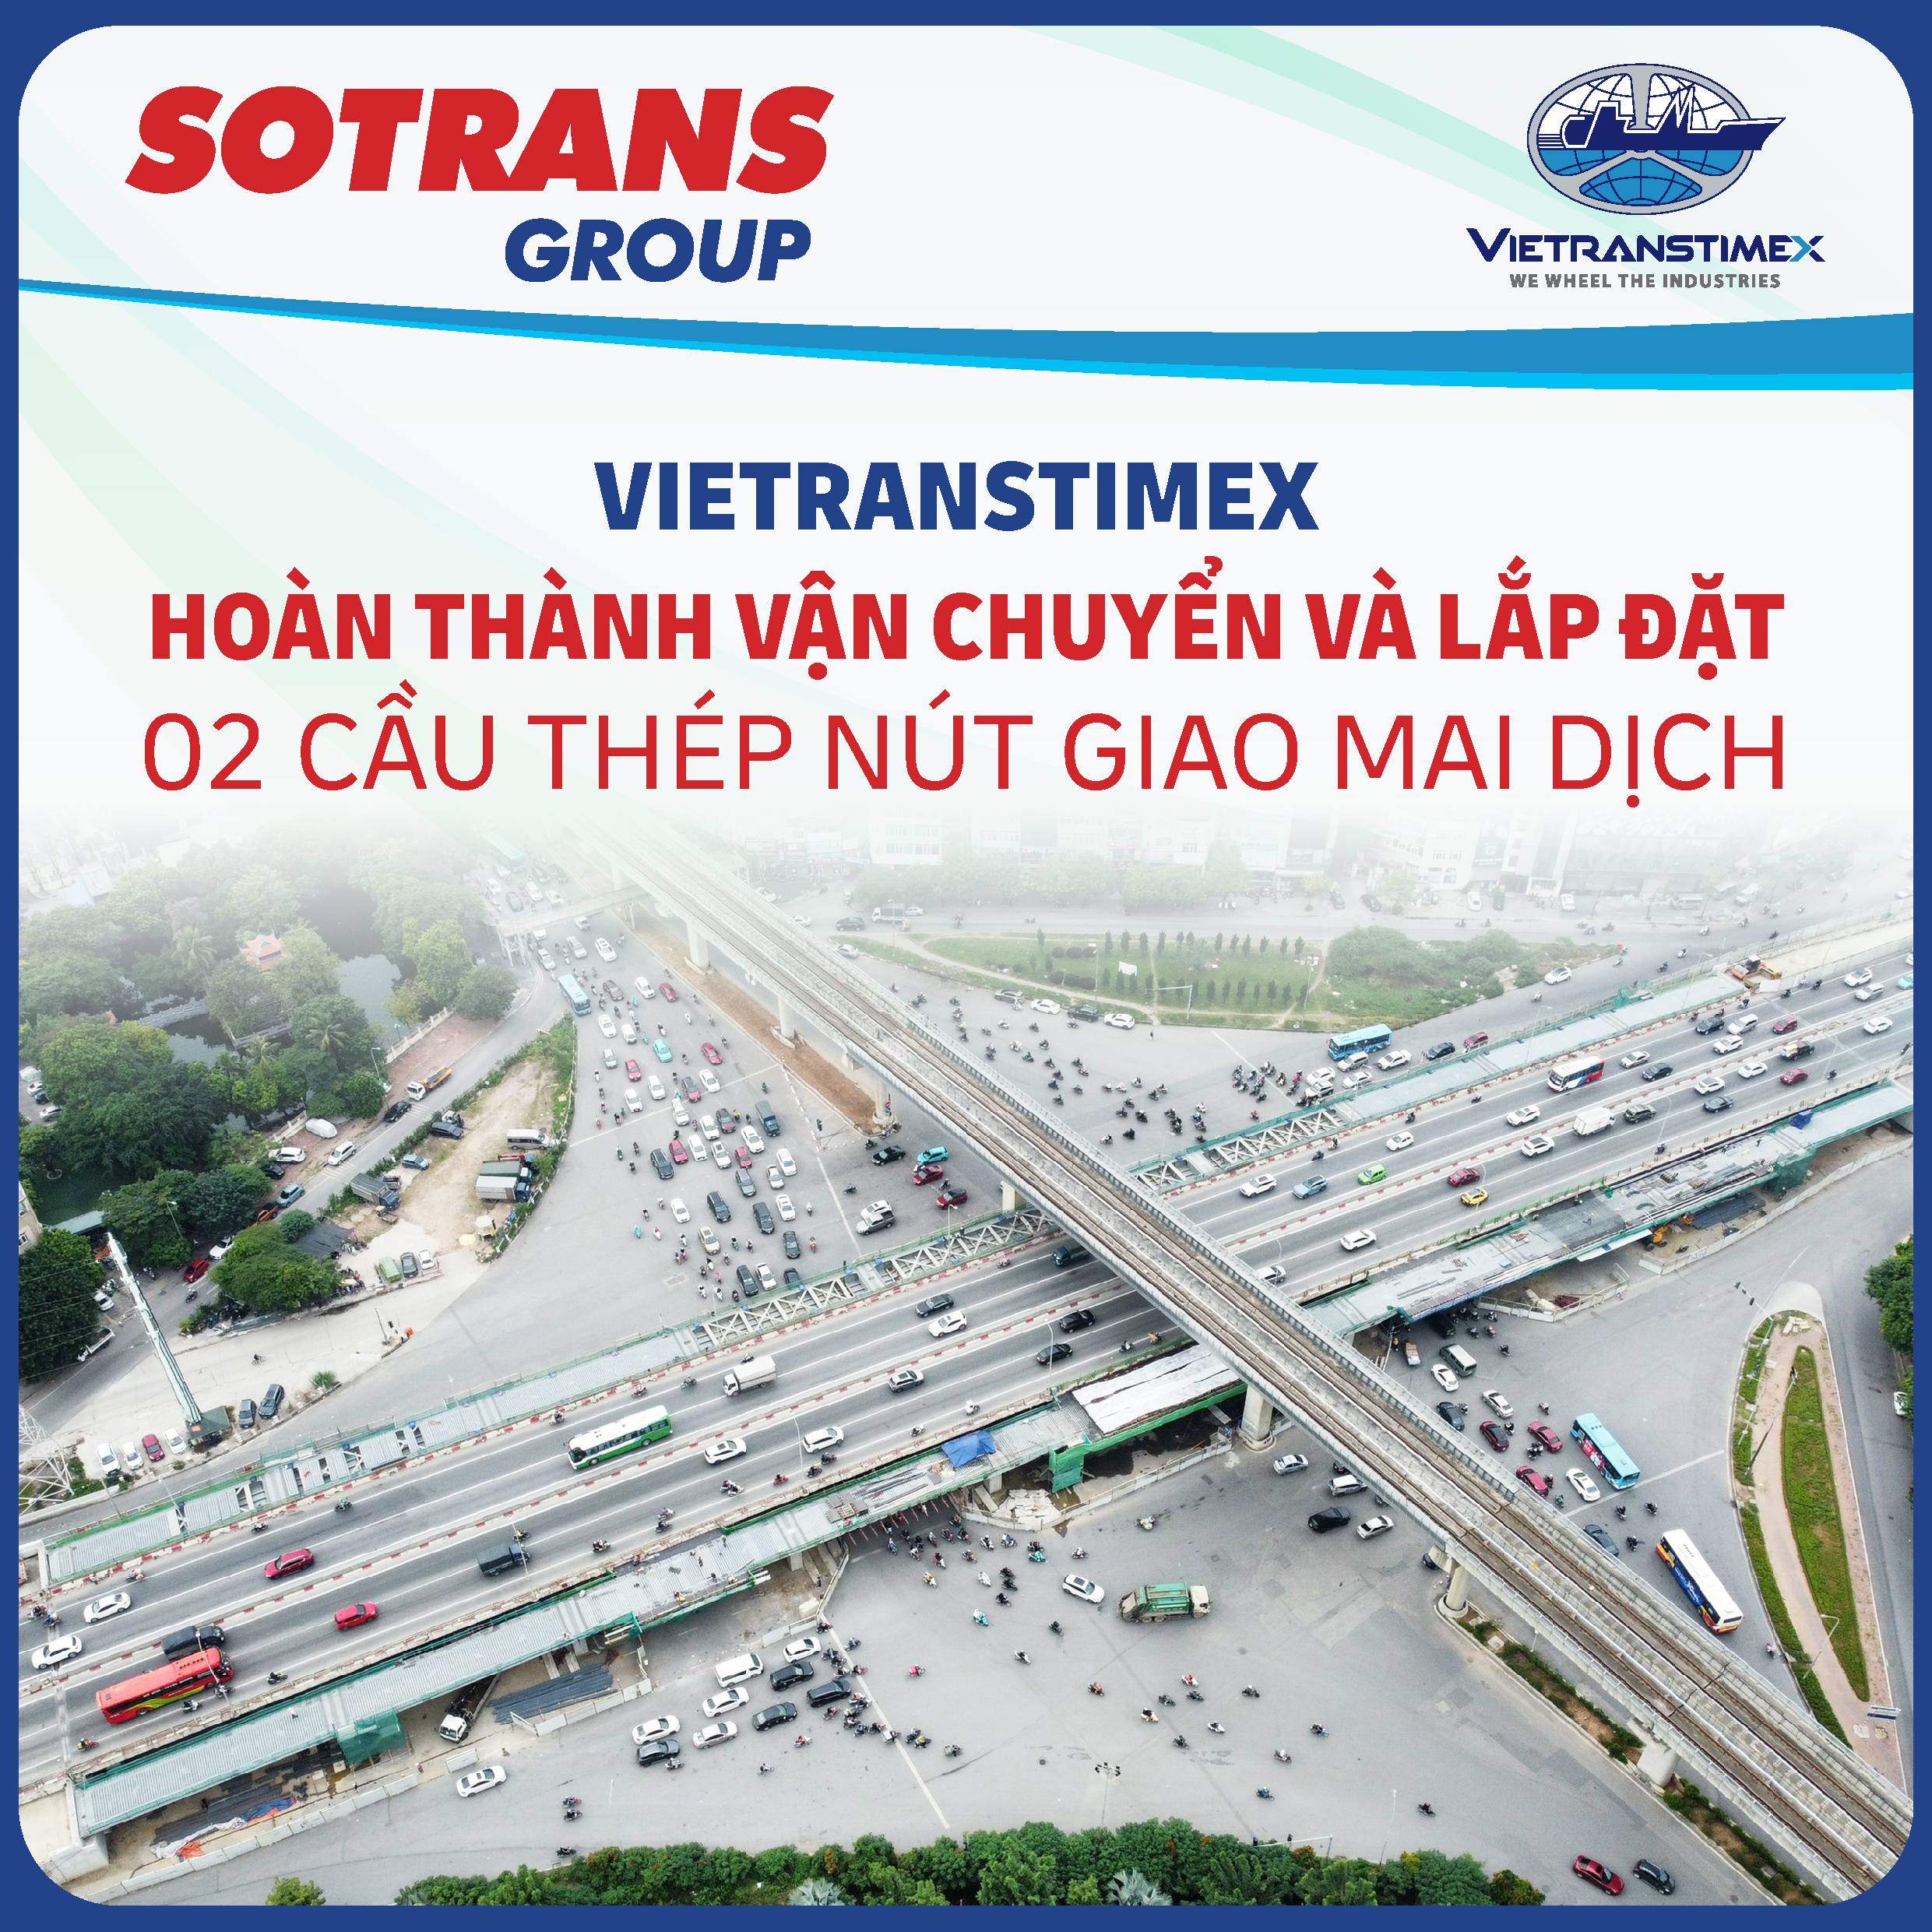 Vietranstimex Completed Transportation and Installation of 02 steel bridges for Mai Dich Interchange